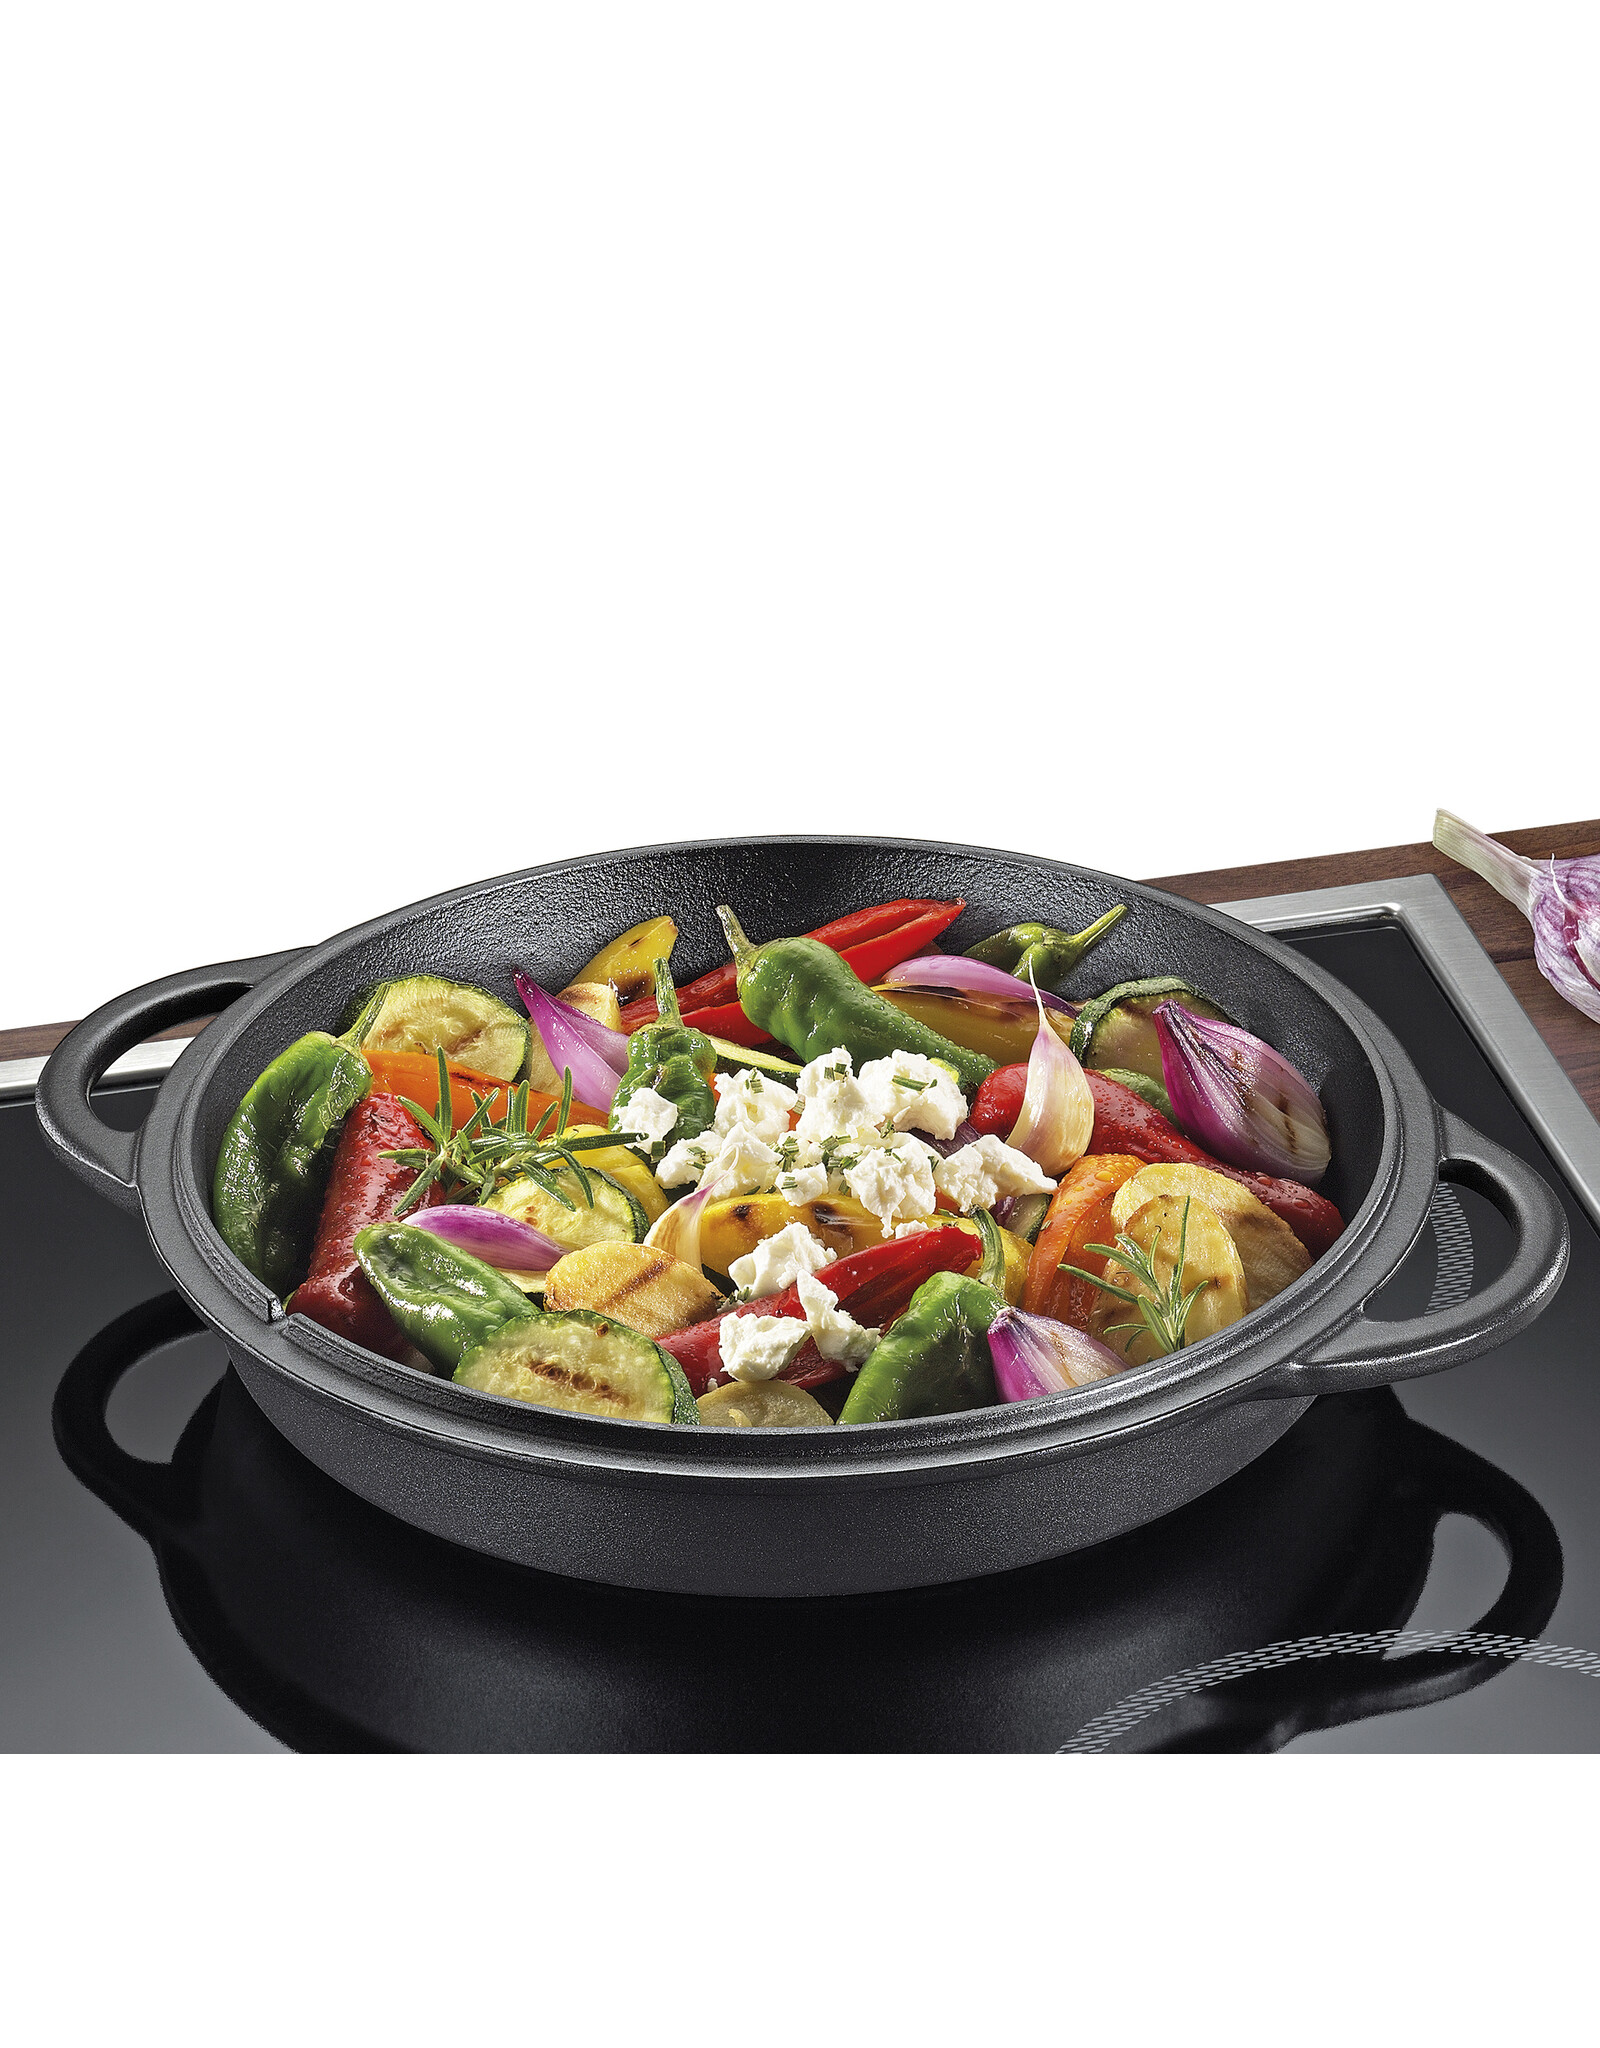 Küchenprofi Sudderpan met grill, 26 cm zwart -BBQ